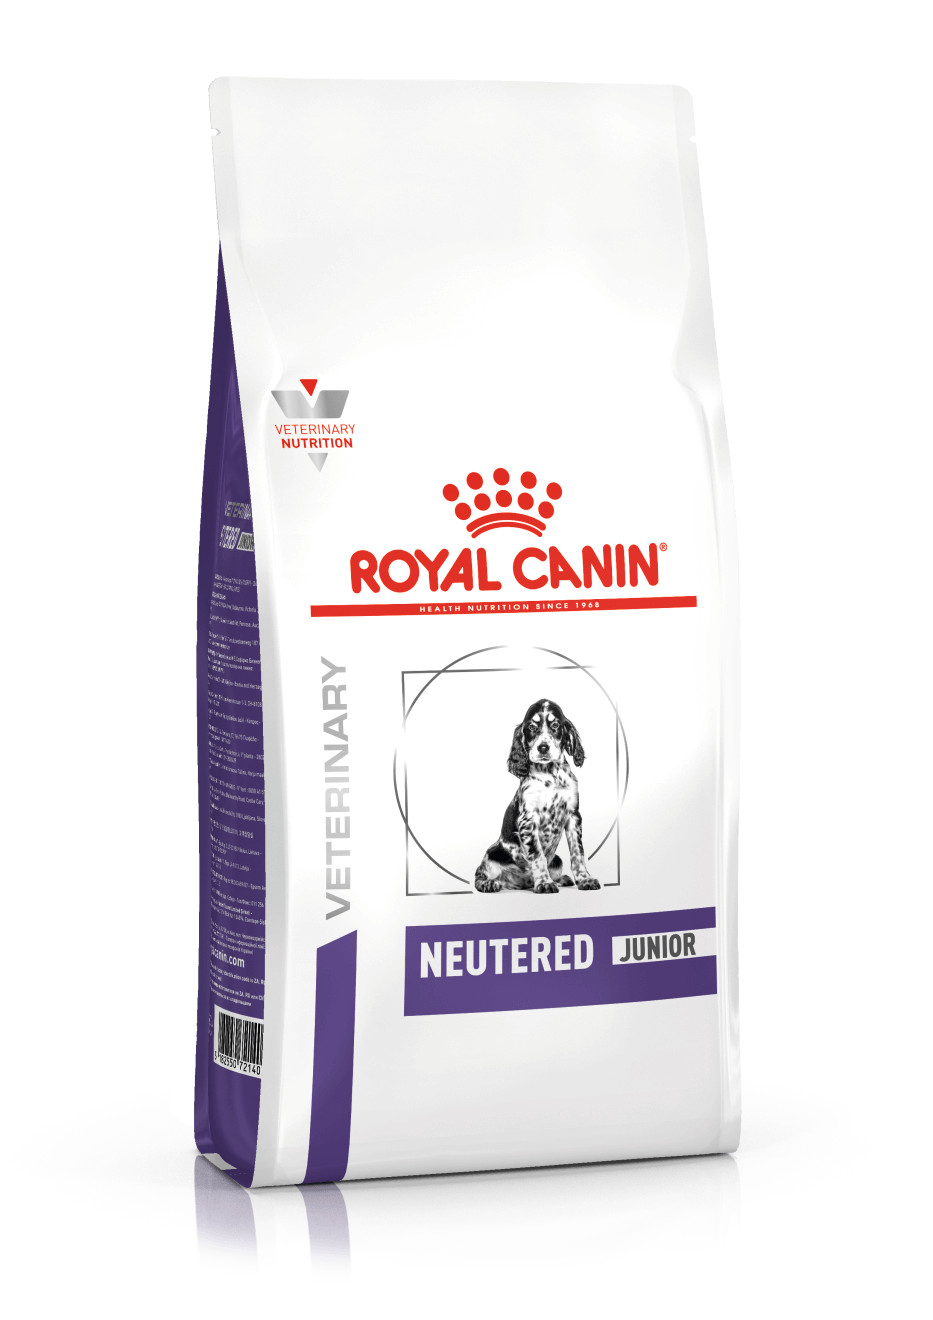 Royal Canin Expert Neutered Junior per cane